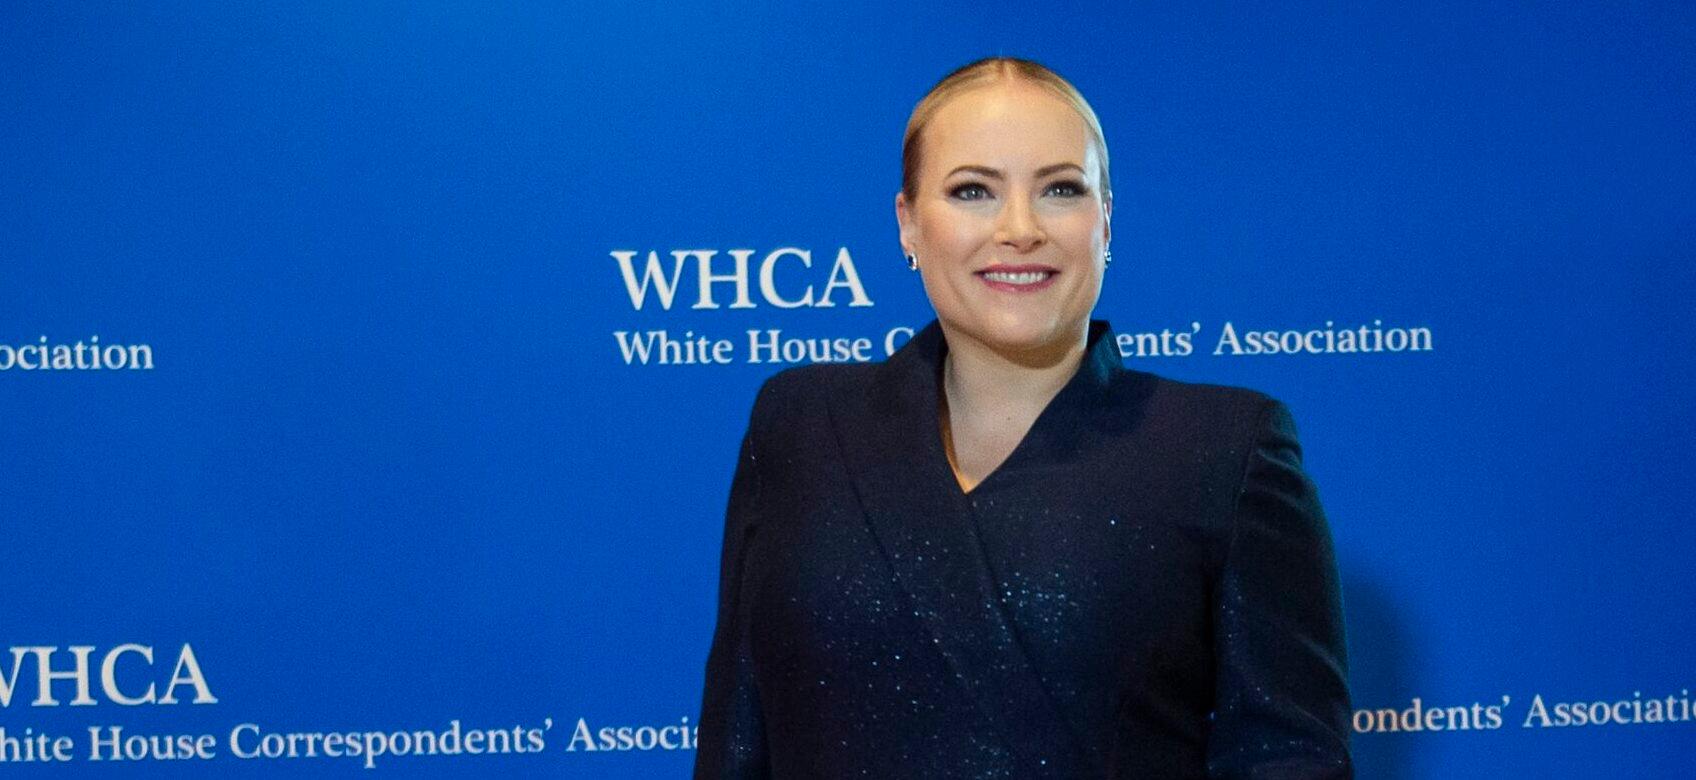 Meghan McCain arrives for the 2022 White House Correspondents Association Annual Dinner at the Washington Hilton Hotel